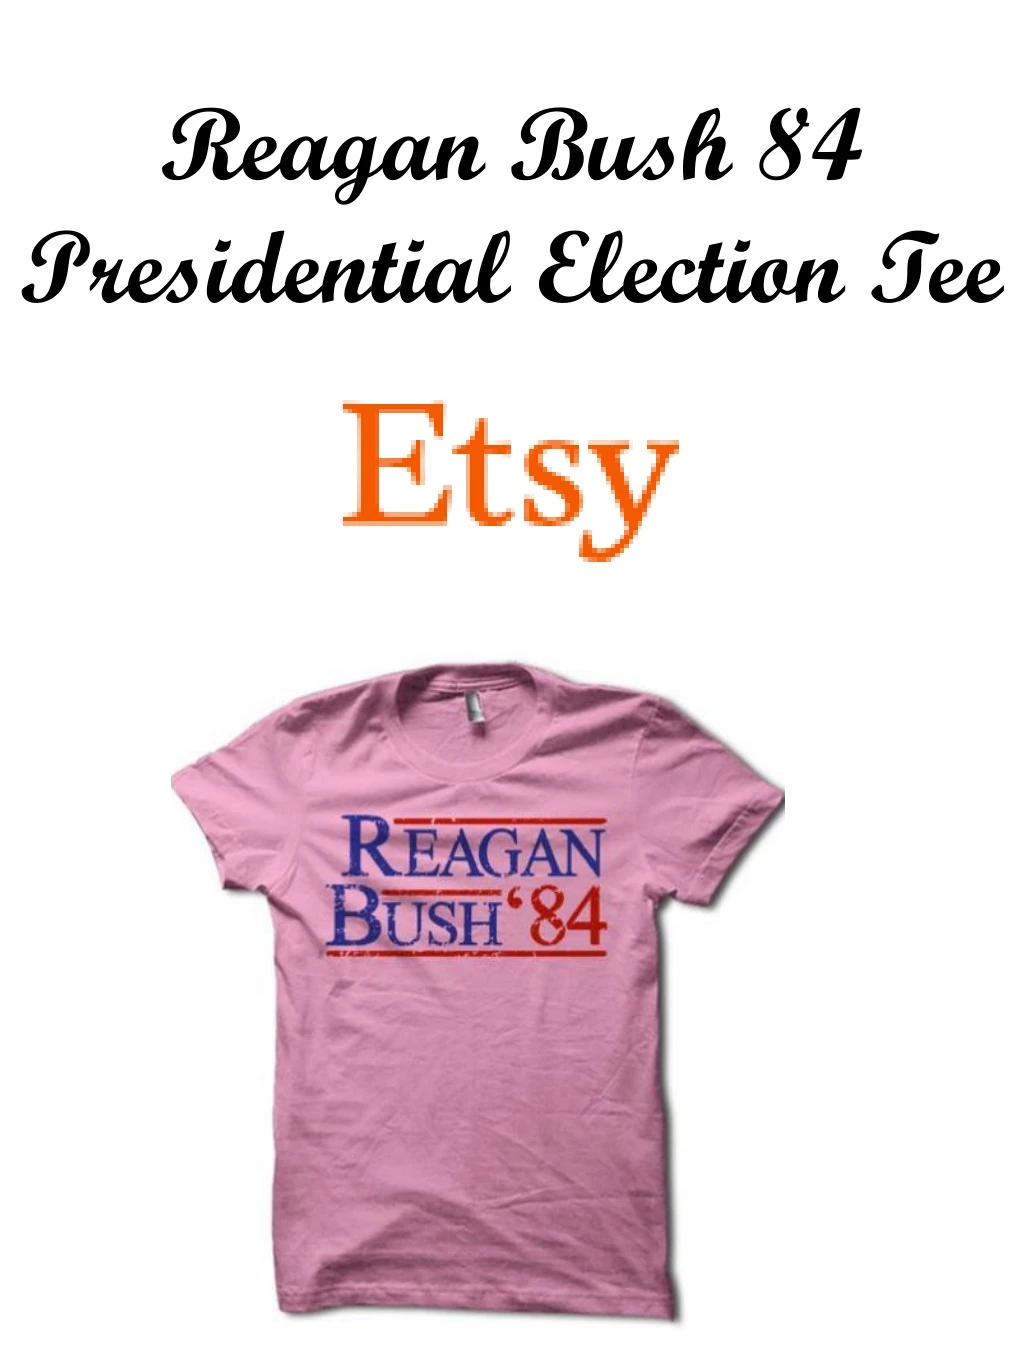 reagan bush 84 presidential election tee